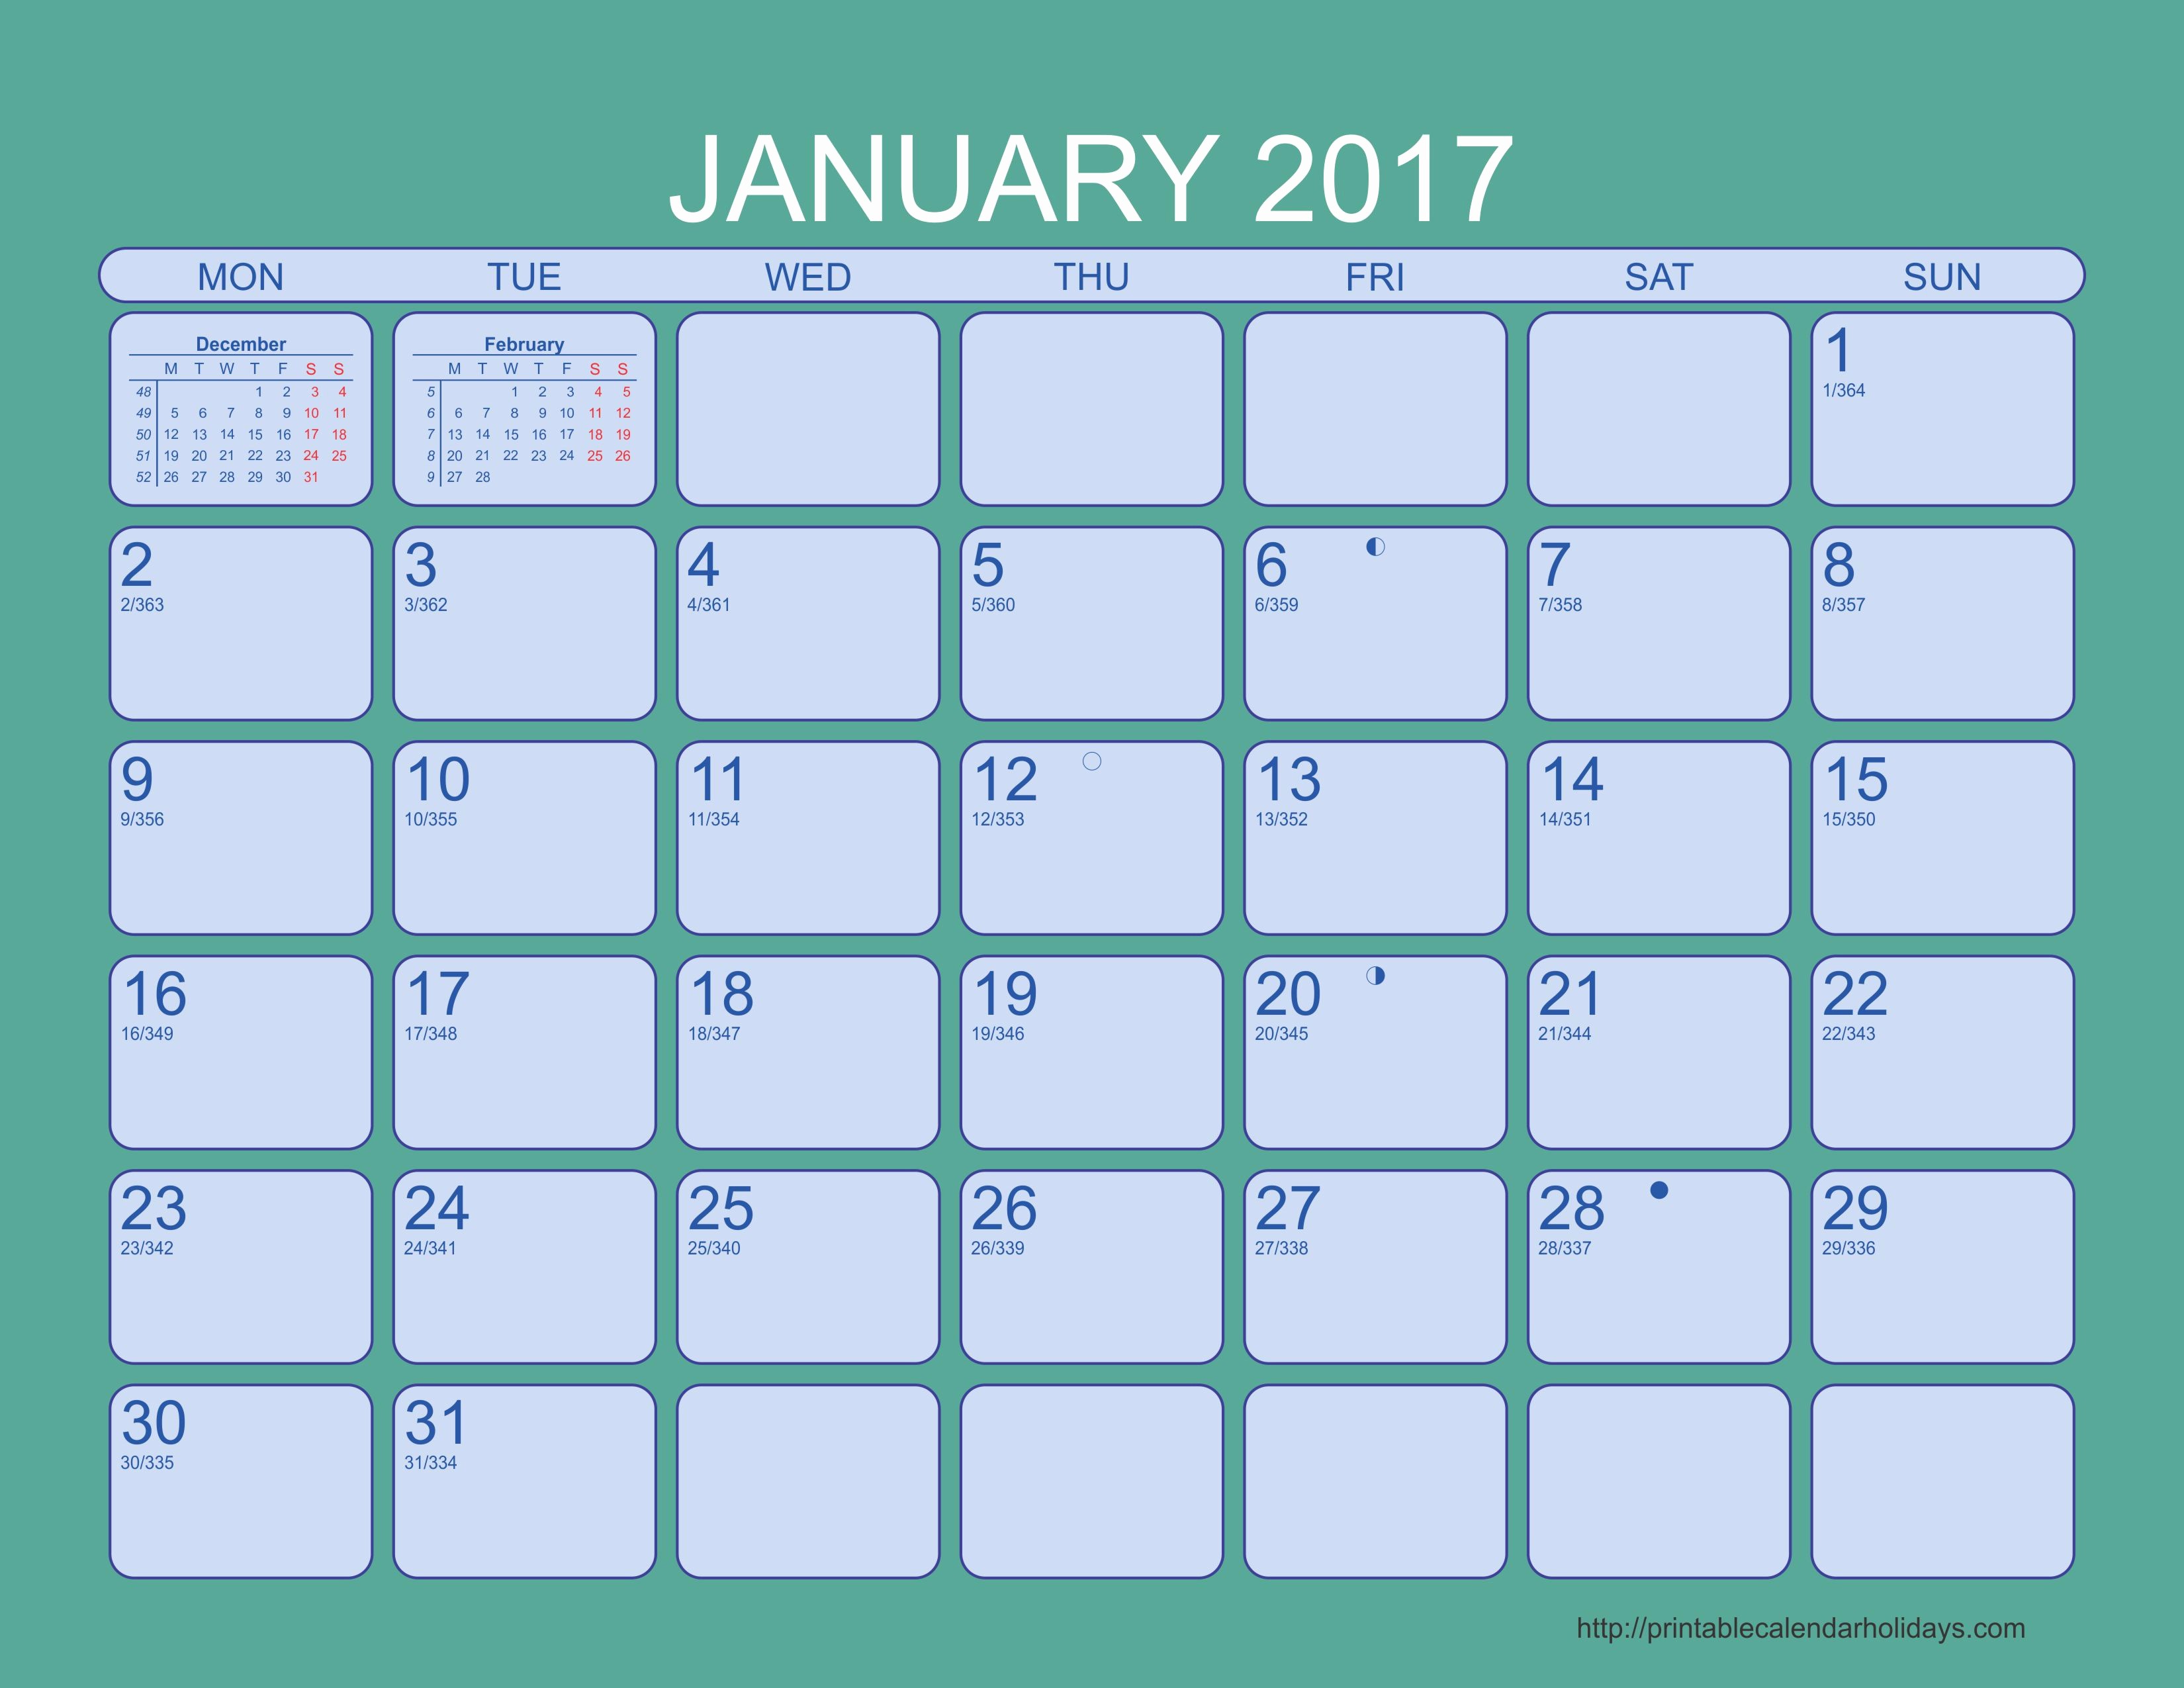 Free Printable Weekly Calendars 2017 Inspirational Monthly Calendar 2017 Archives Free Printable Calendar